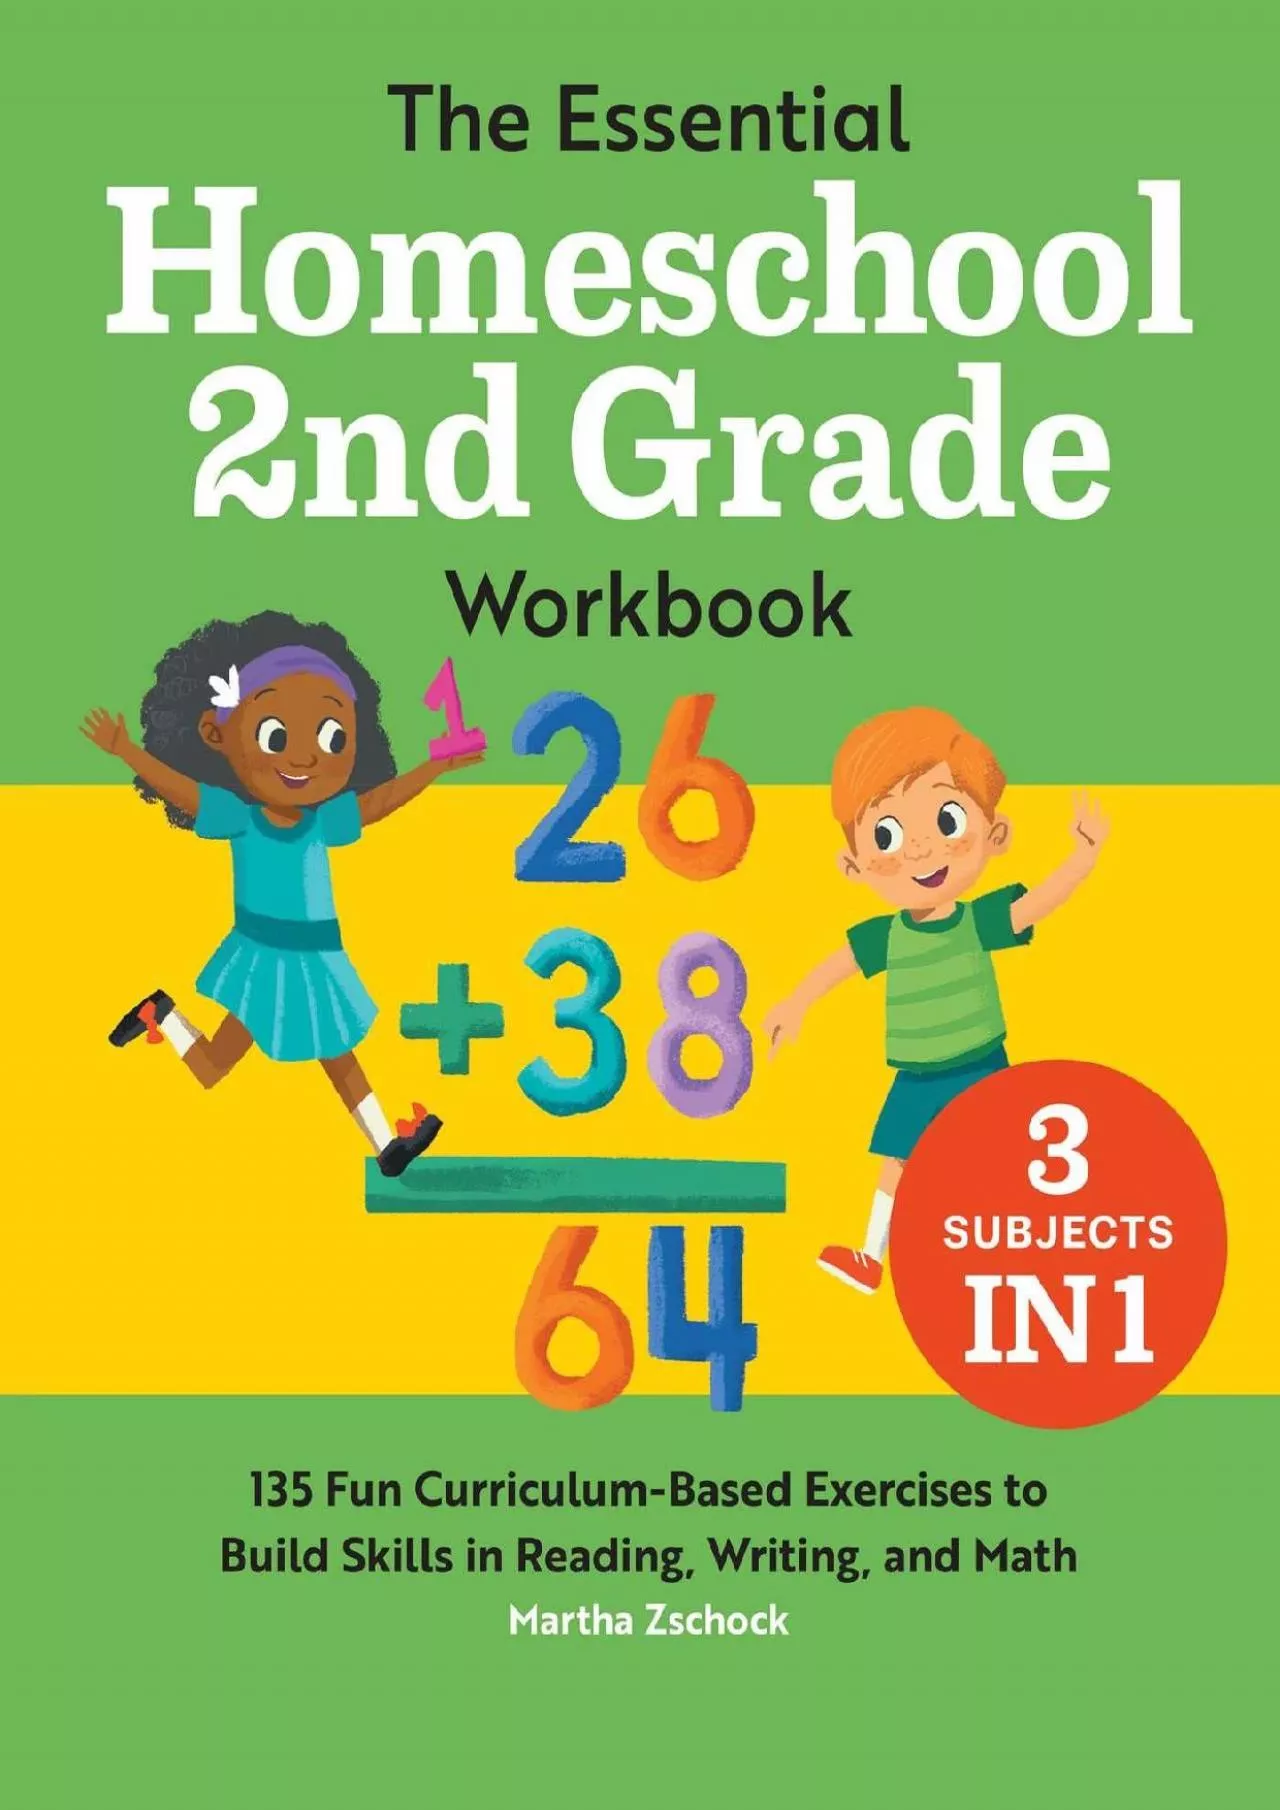 [DOWNLOAD] The Essential Homeschool 2nd Grade Workbook: 135 Fun Curriculum-Based Exercises